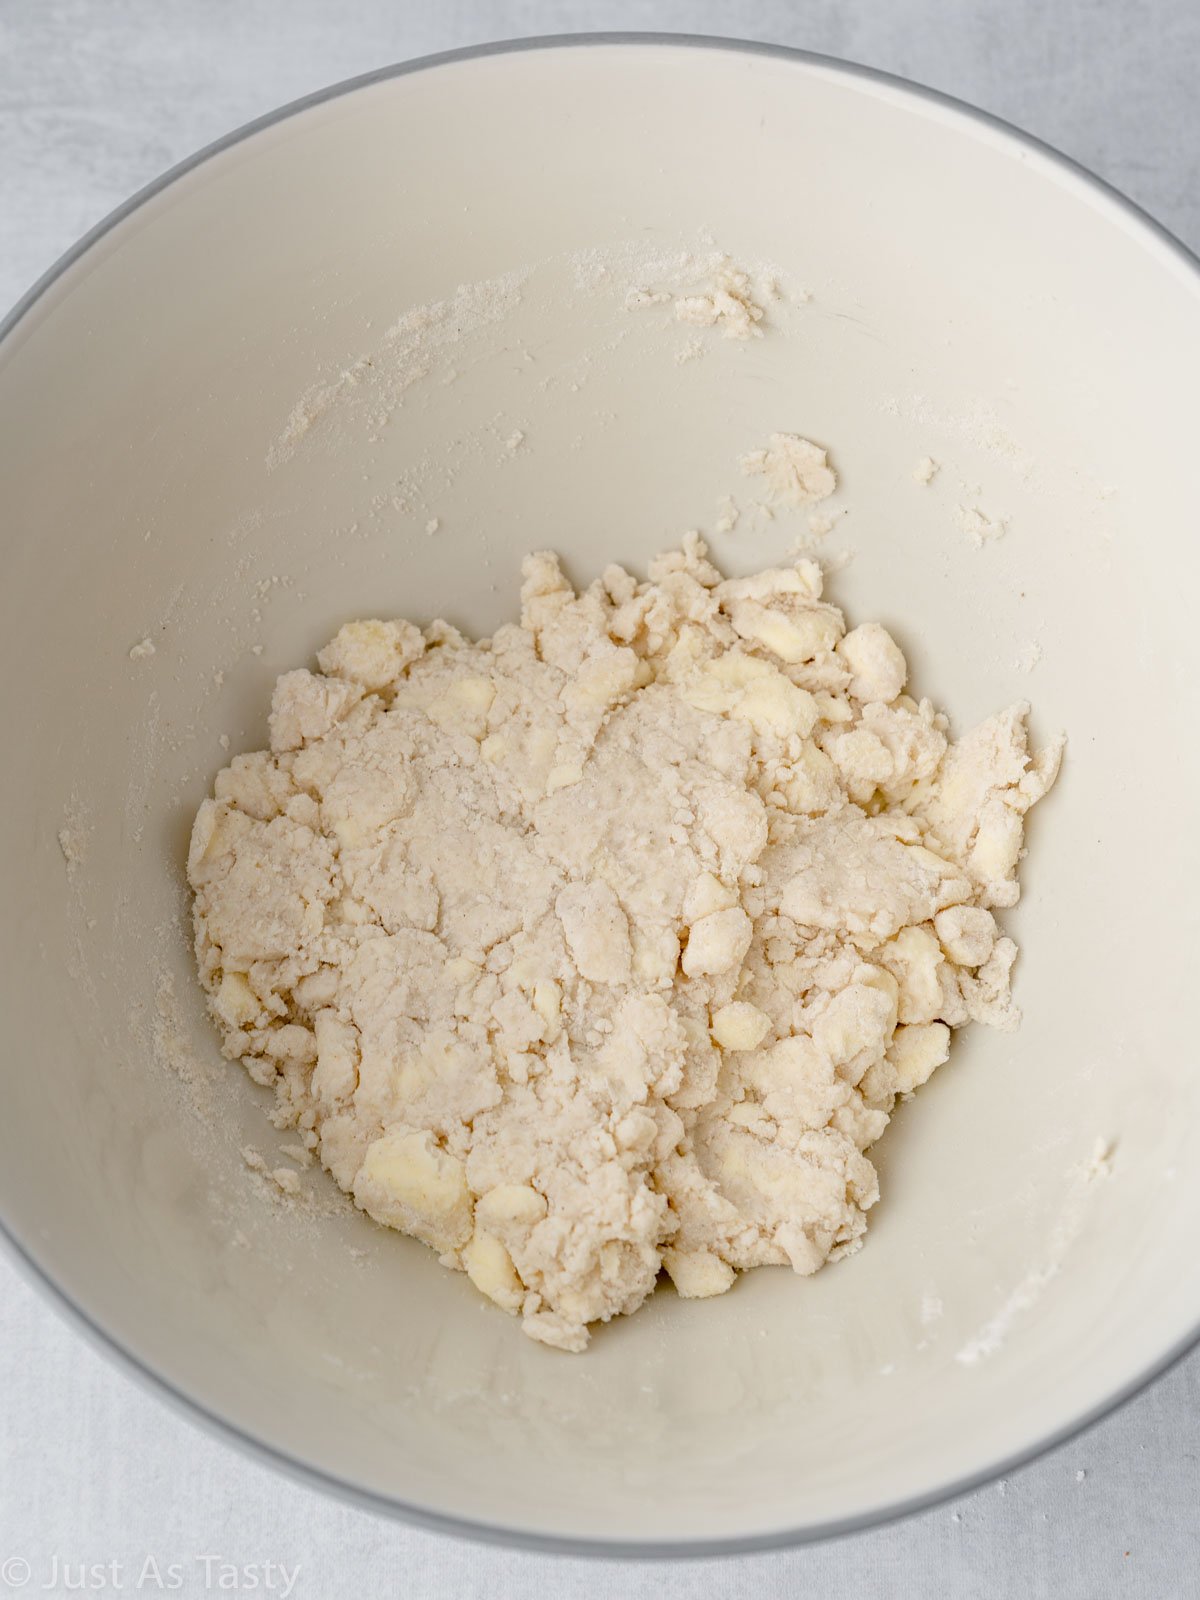 Pie crust dough in a mixing bowl.